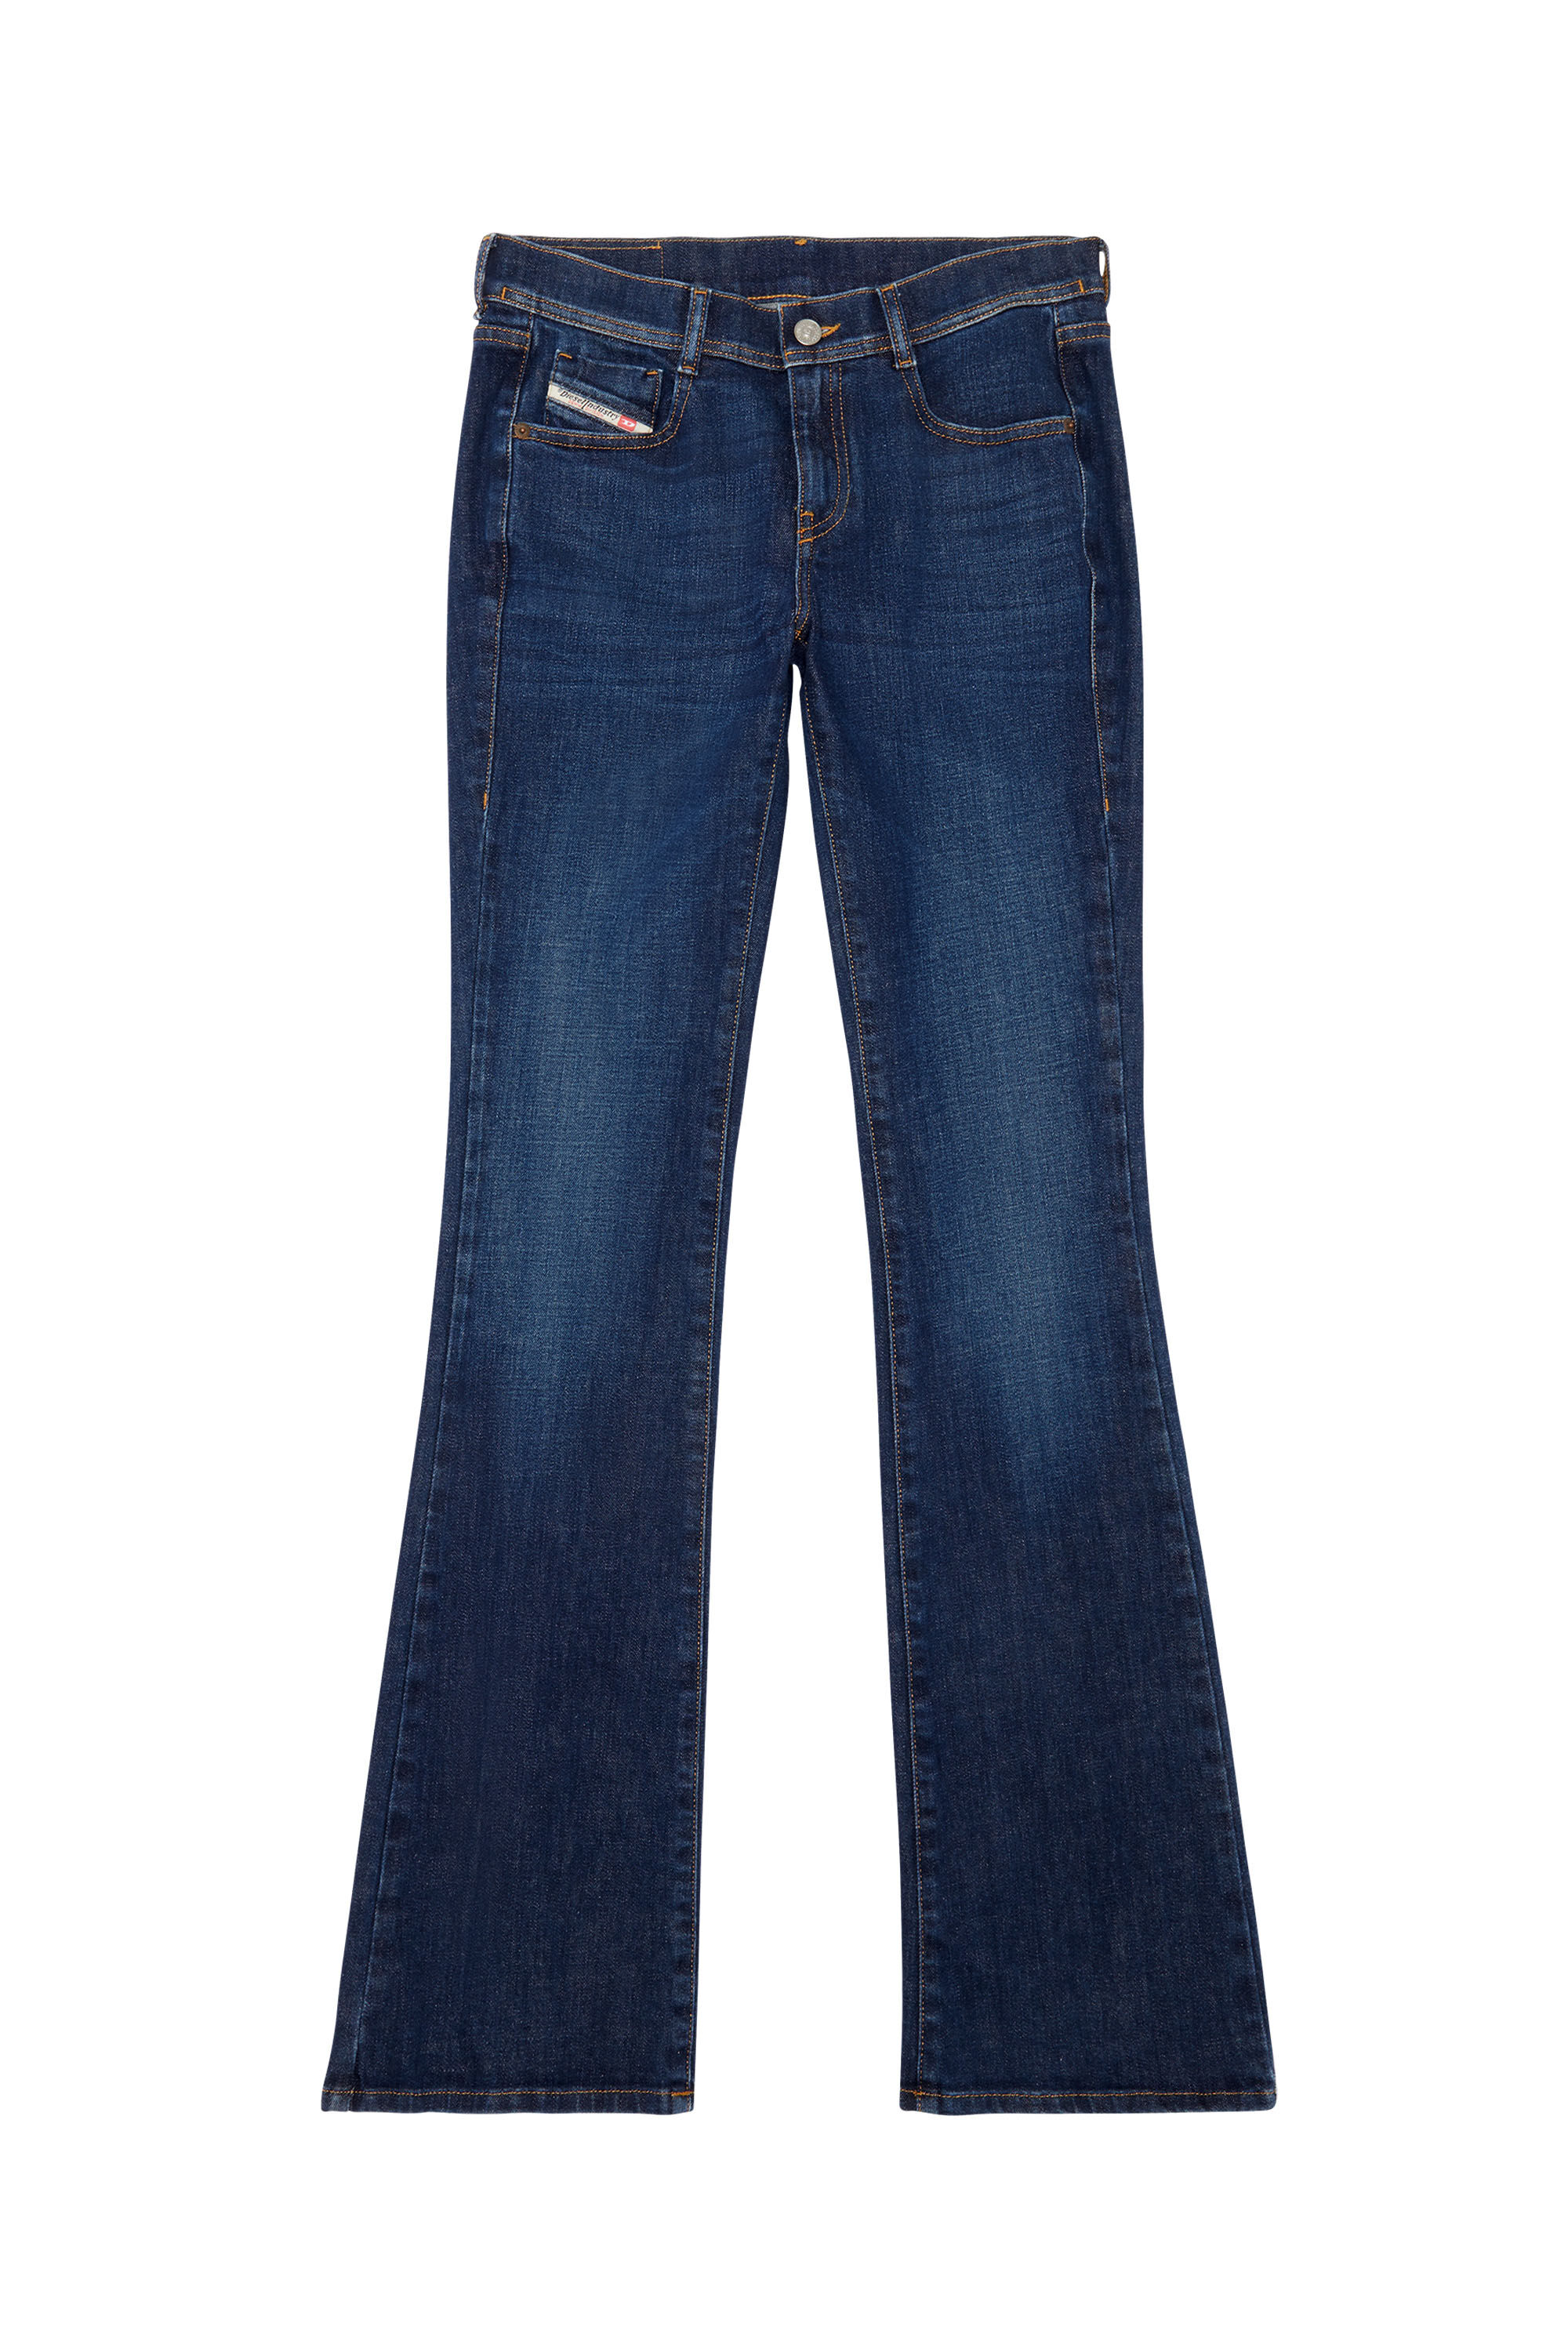 industri Assassin ulv 1969 D-EBBEY Woman: Bootcut dark blue Jeans | Diesel®